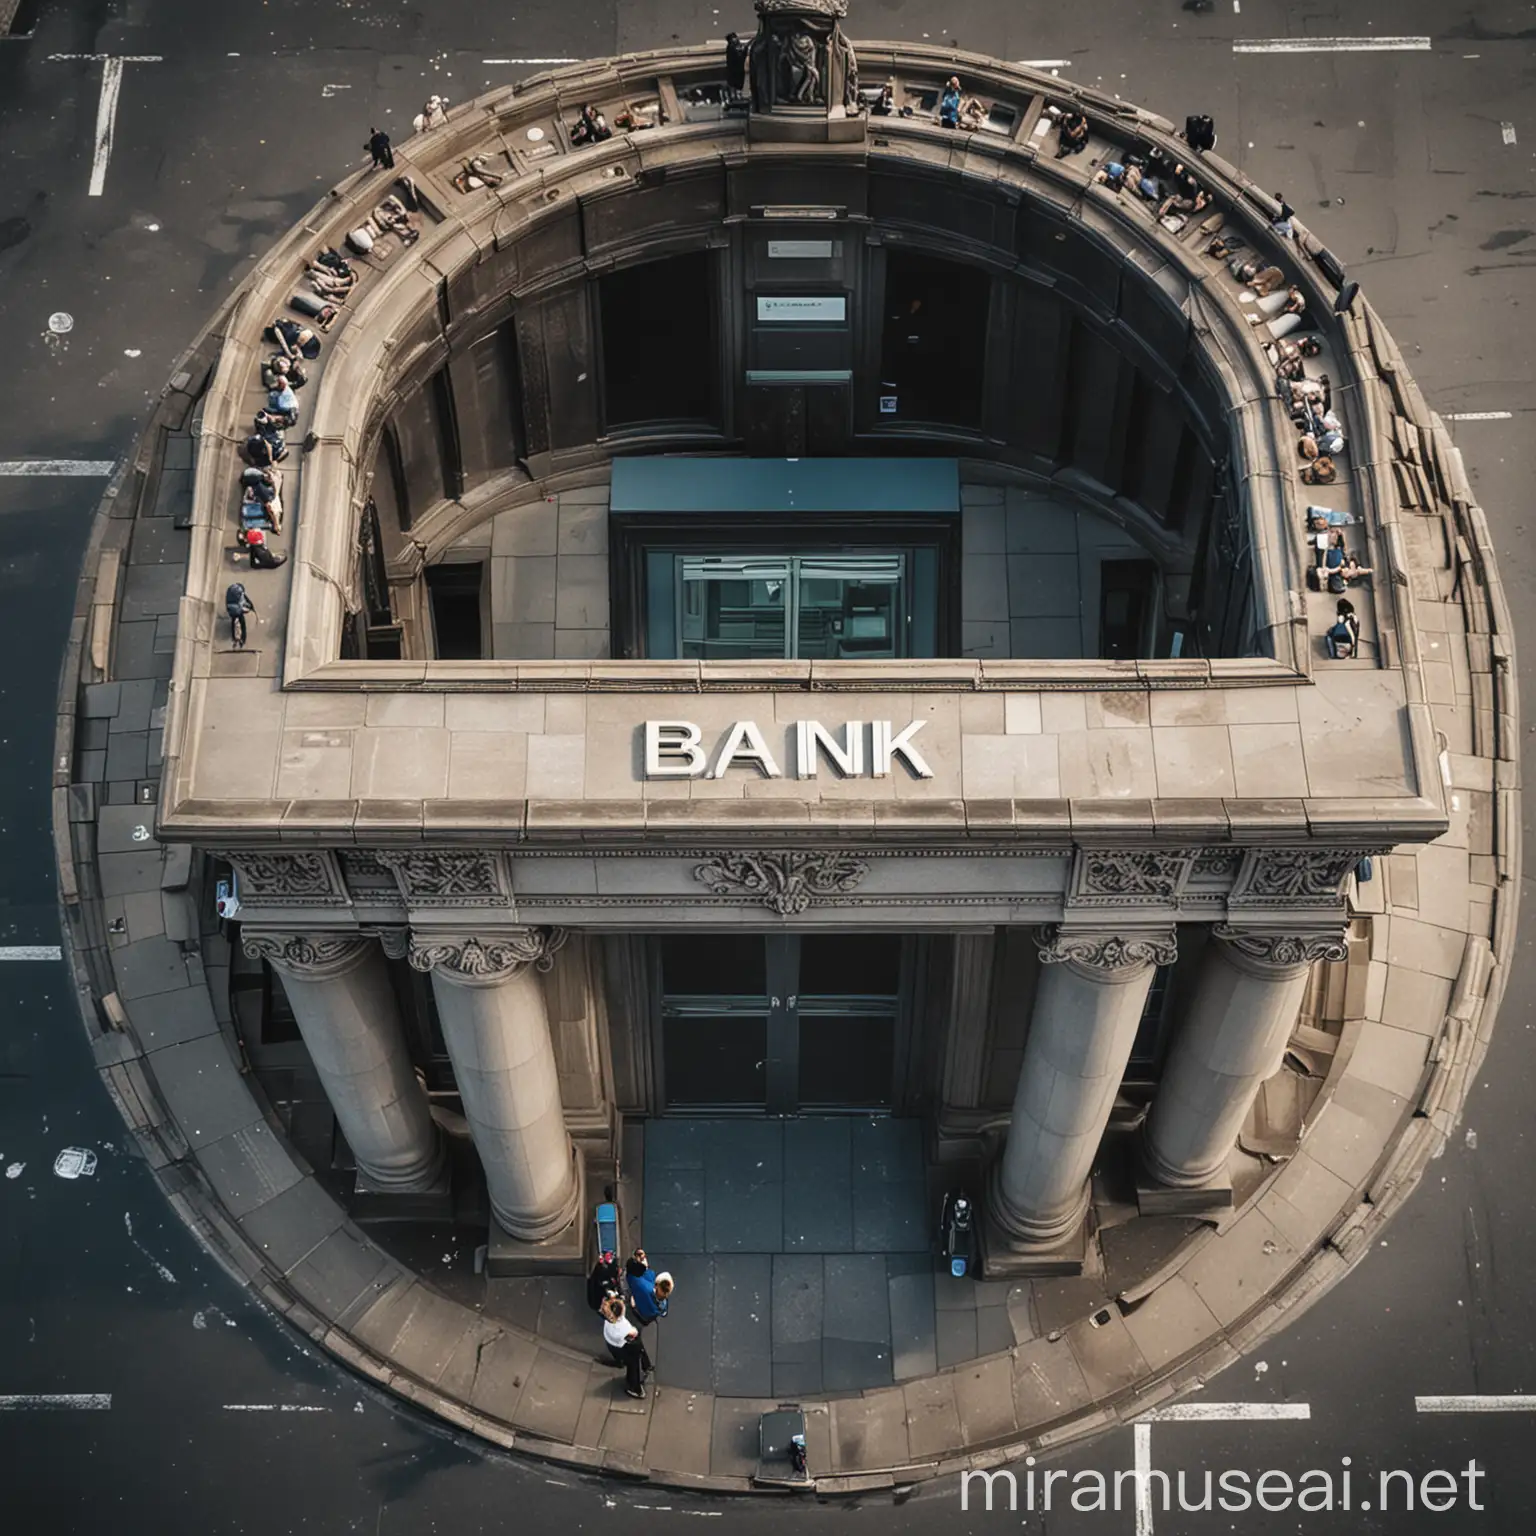 Aerial View of Urban Bank Buildings and Surroundings